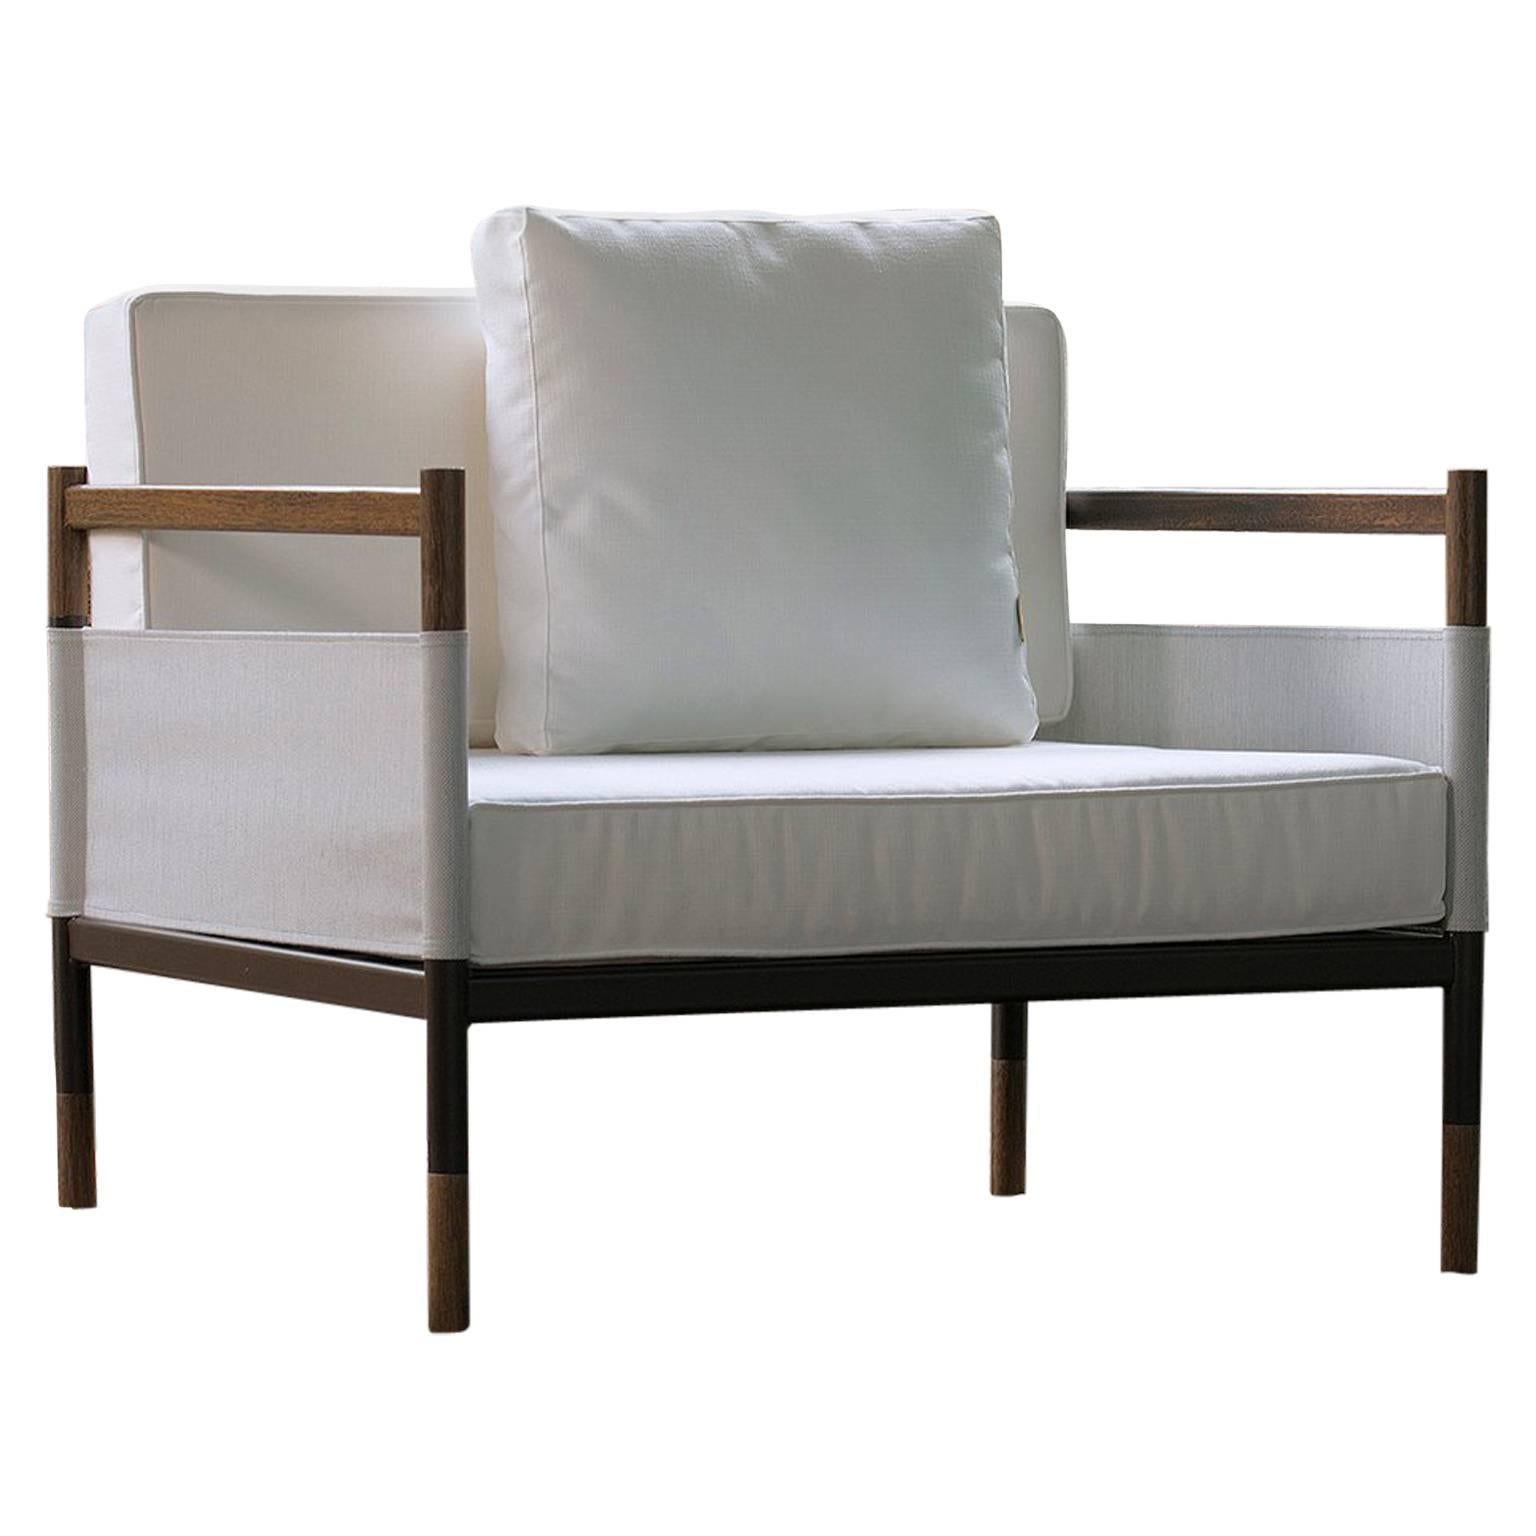 Minimalist Outdoor Lounge Chair, Brazilian Design